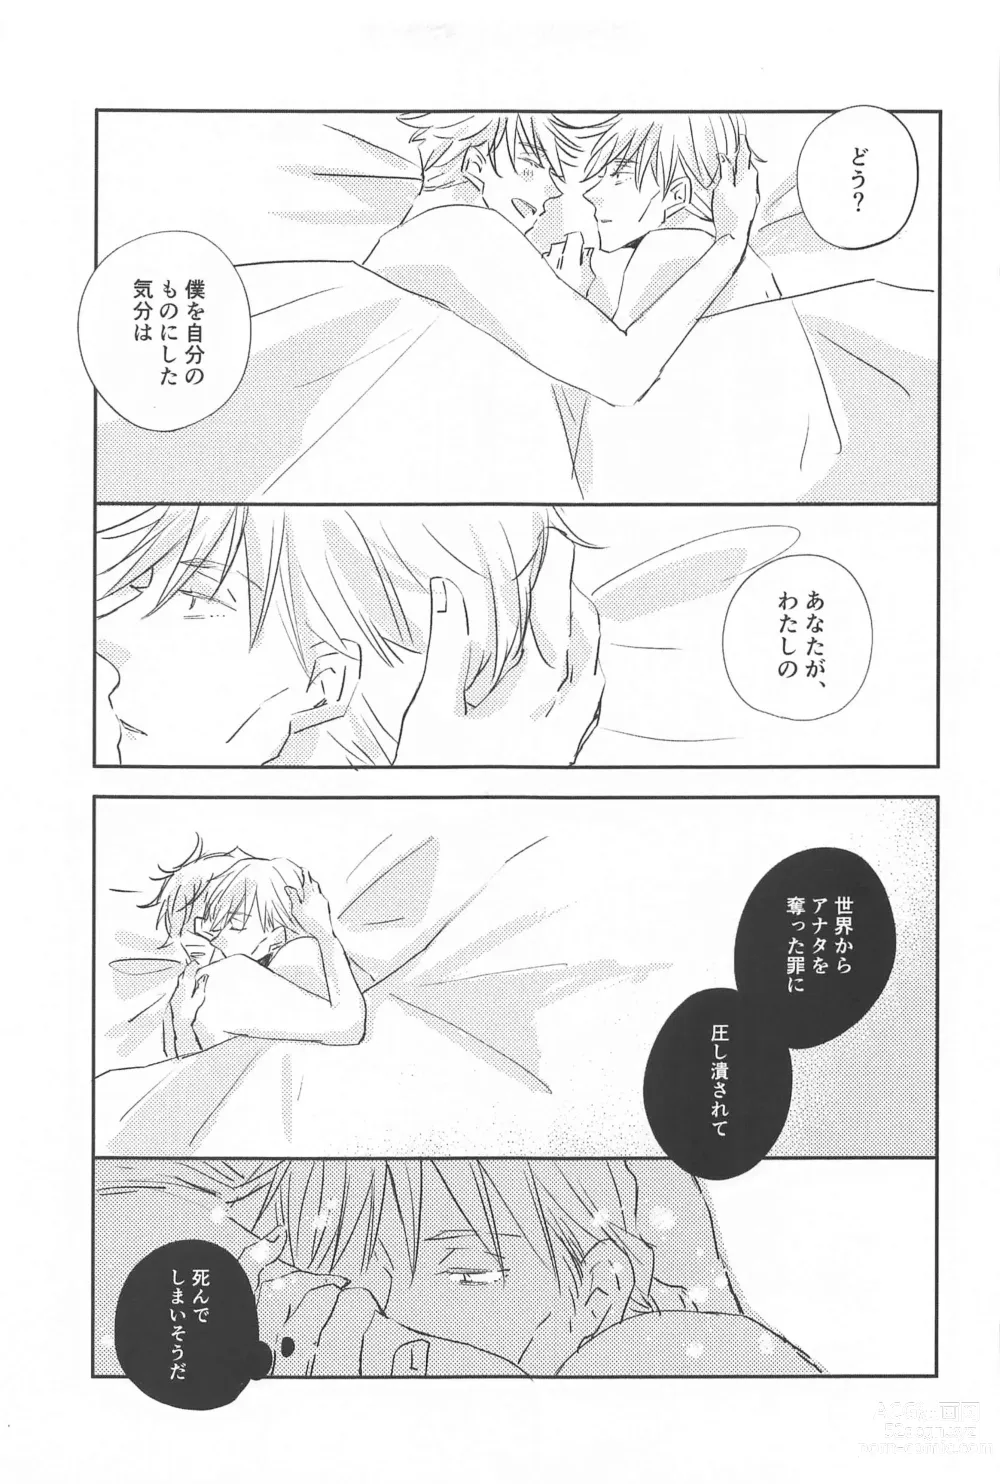 Page 34 of doujinshi timeless memory 2